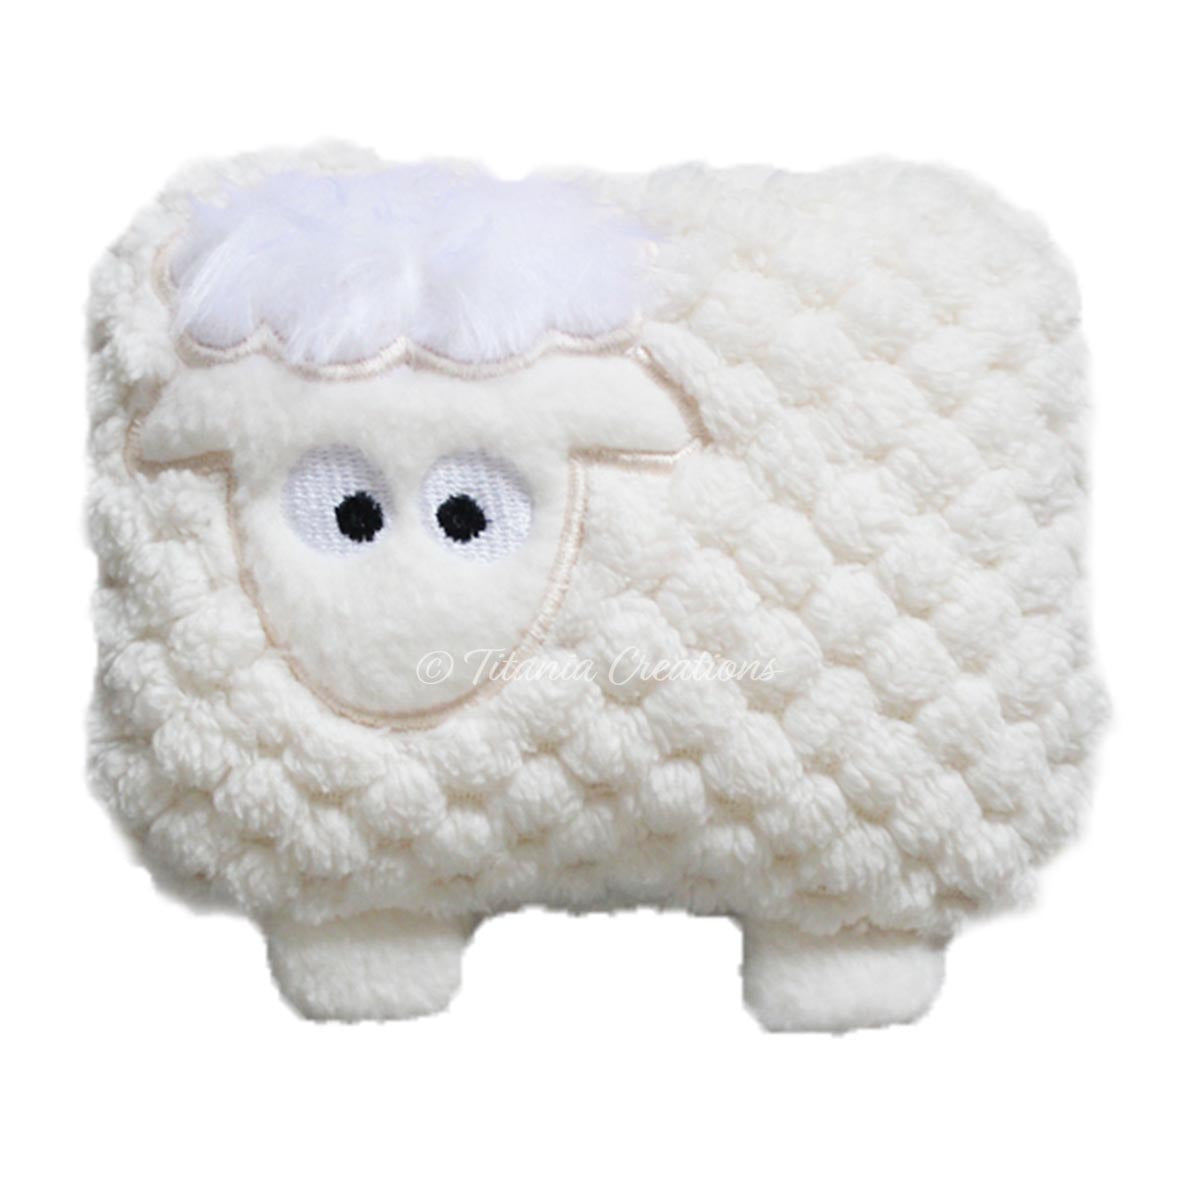 ITH Sheep Stuffie 4x4 5x7 6x10 8x12